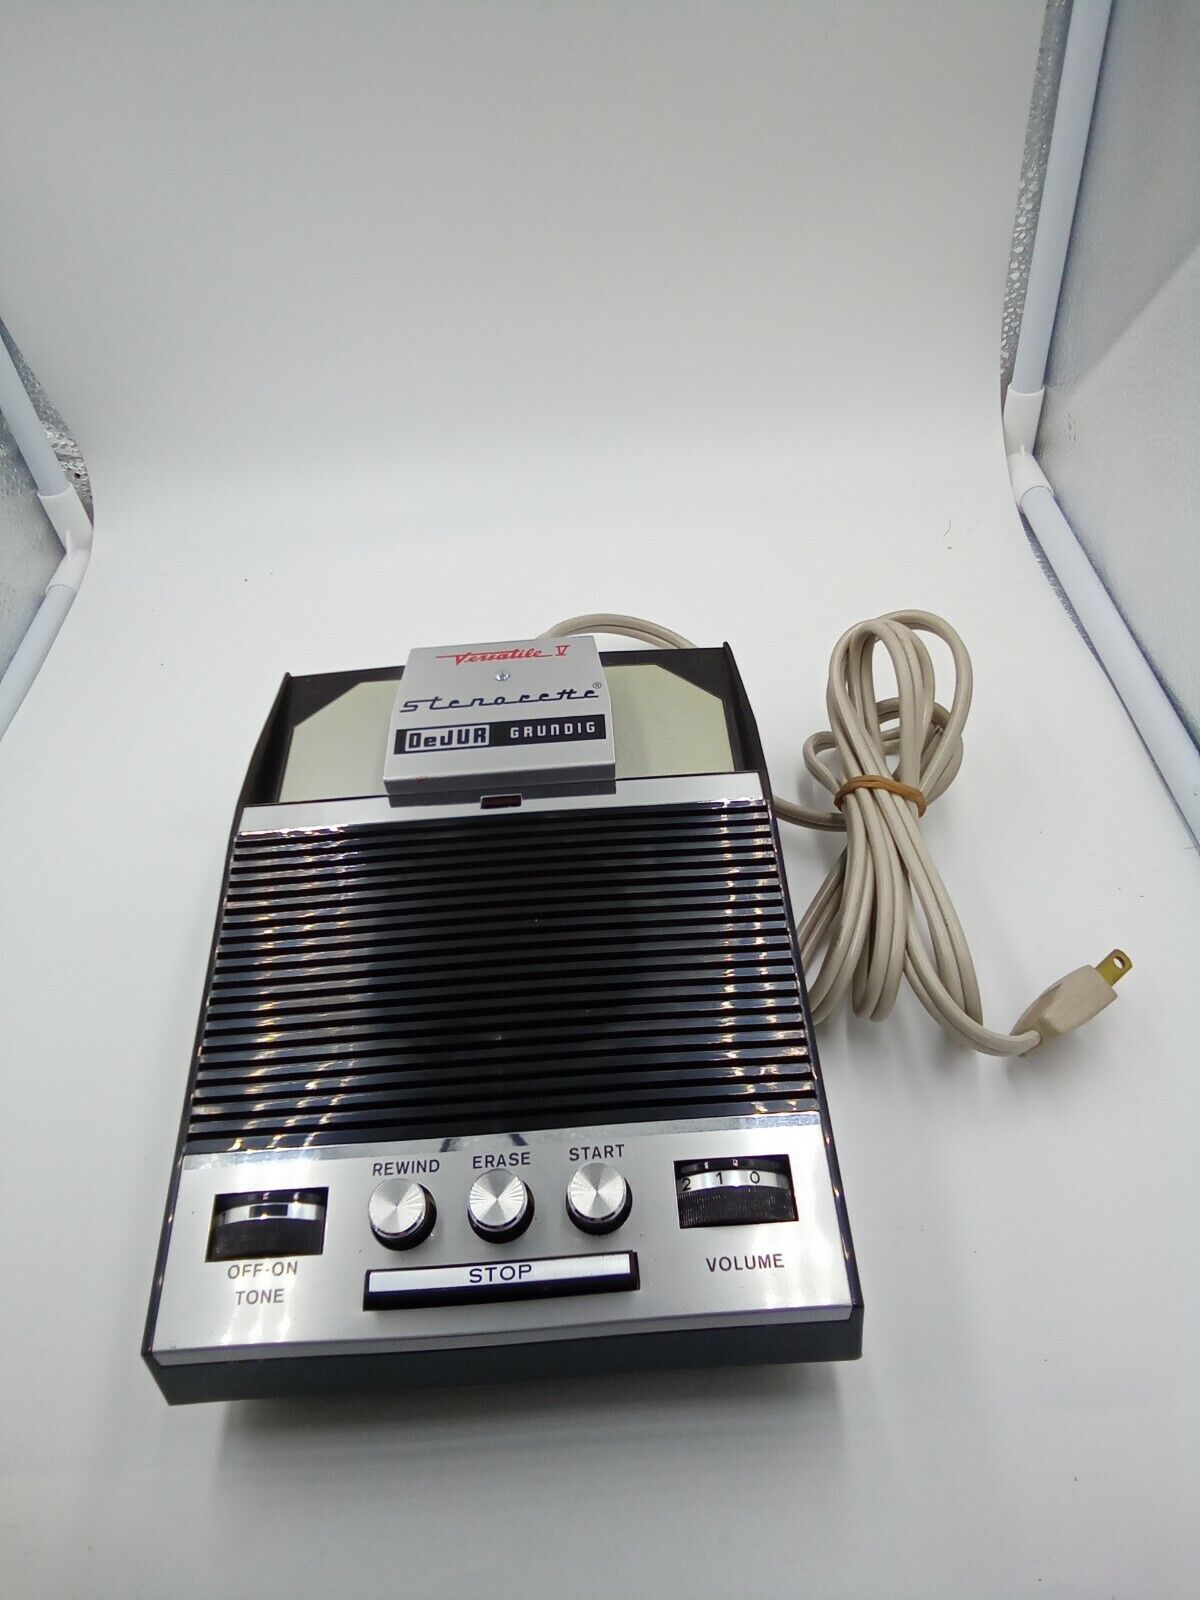 Vintage Grundig DeJUR Stenorette Recorder Versatile V tape recorder powers on